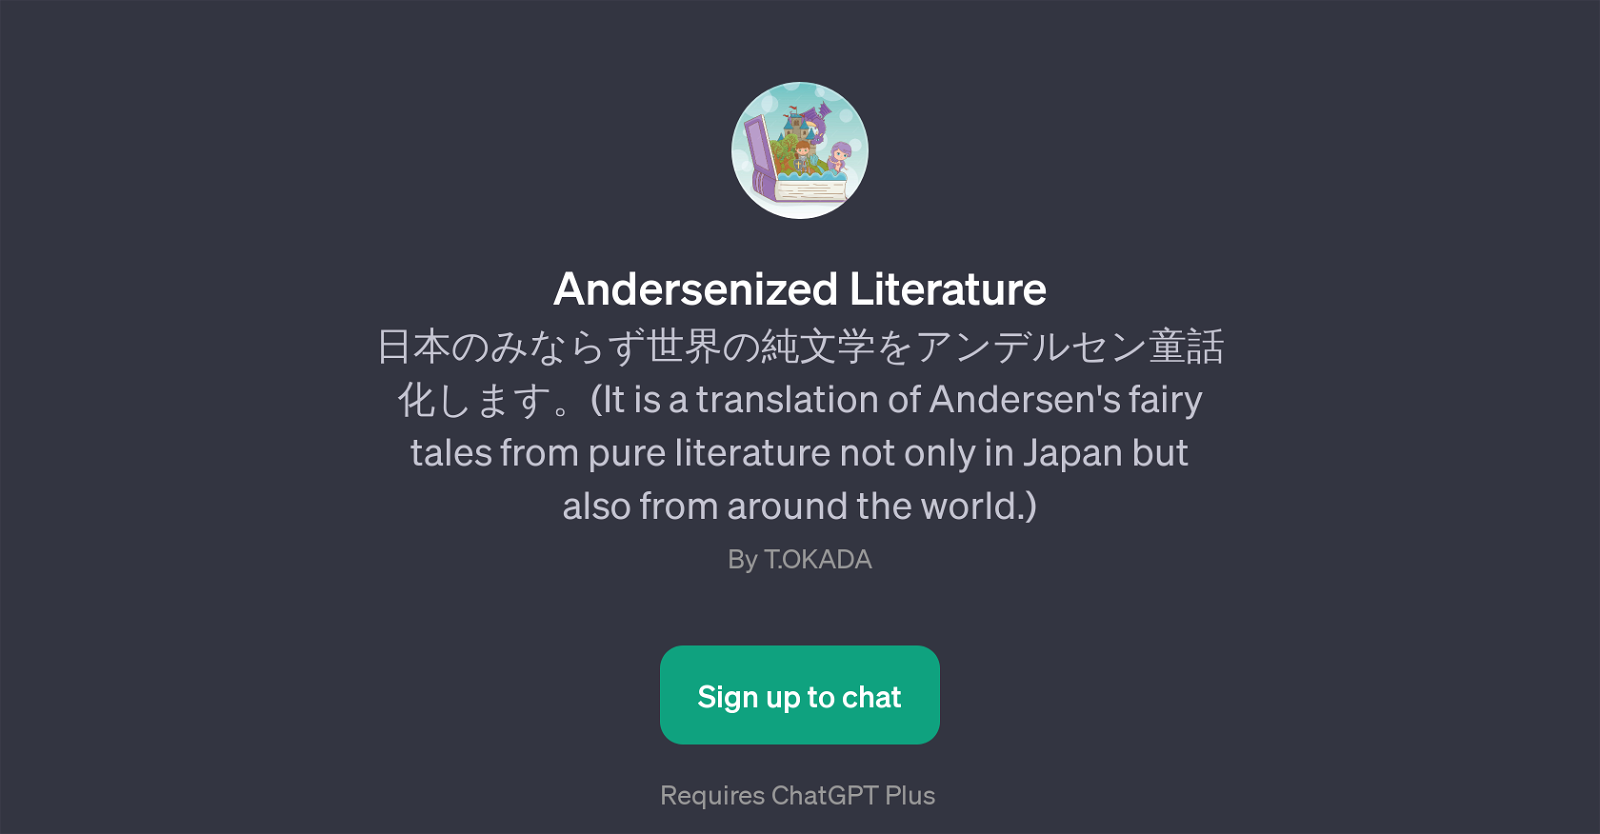 Andersenized Literature website